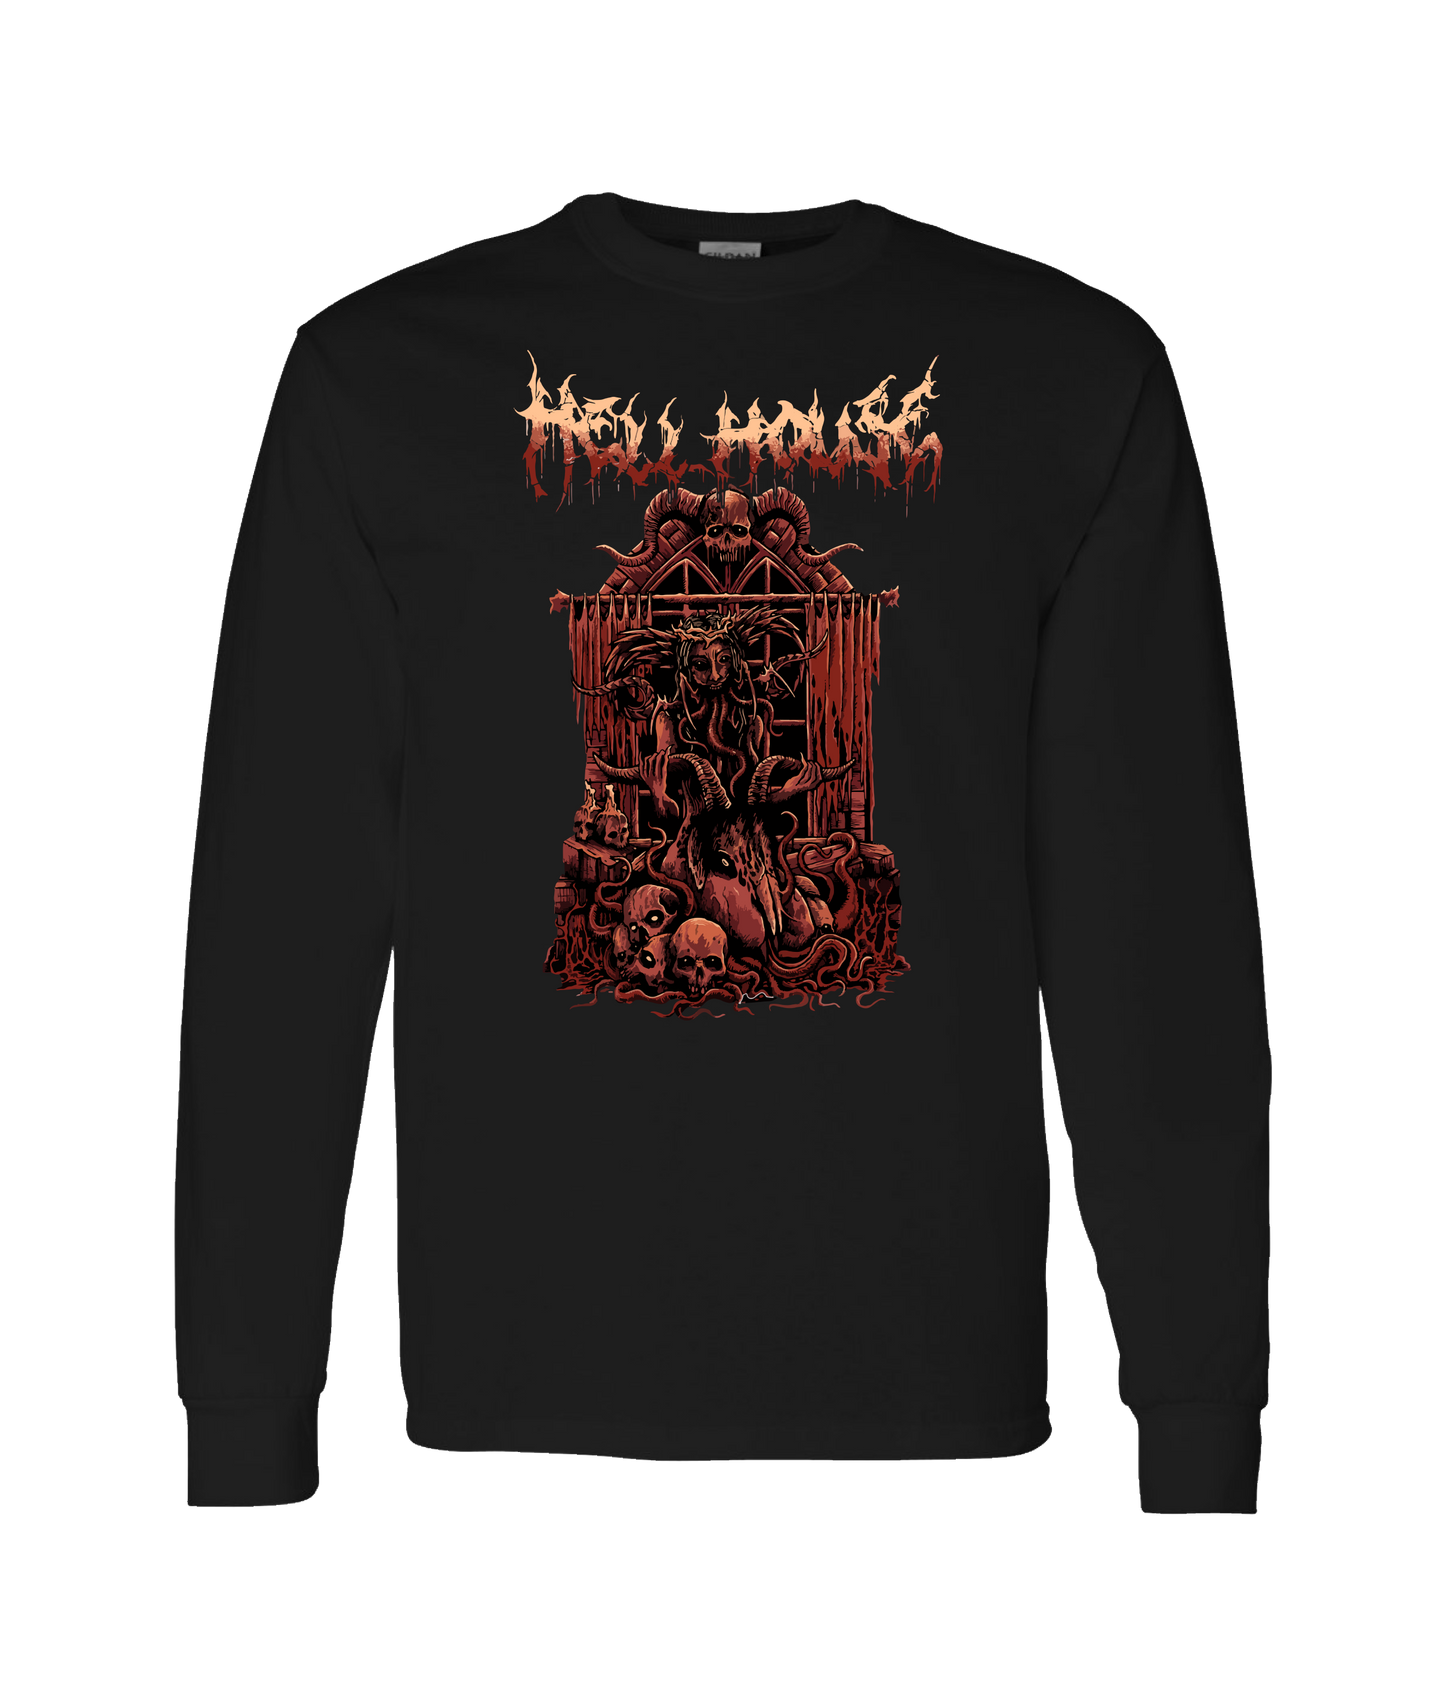 Hellhouse crypt - GIRLGOAT - Black Long Sleeve T